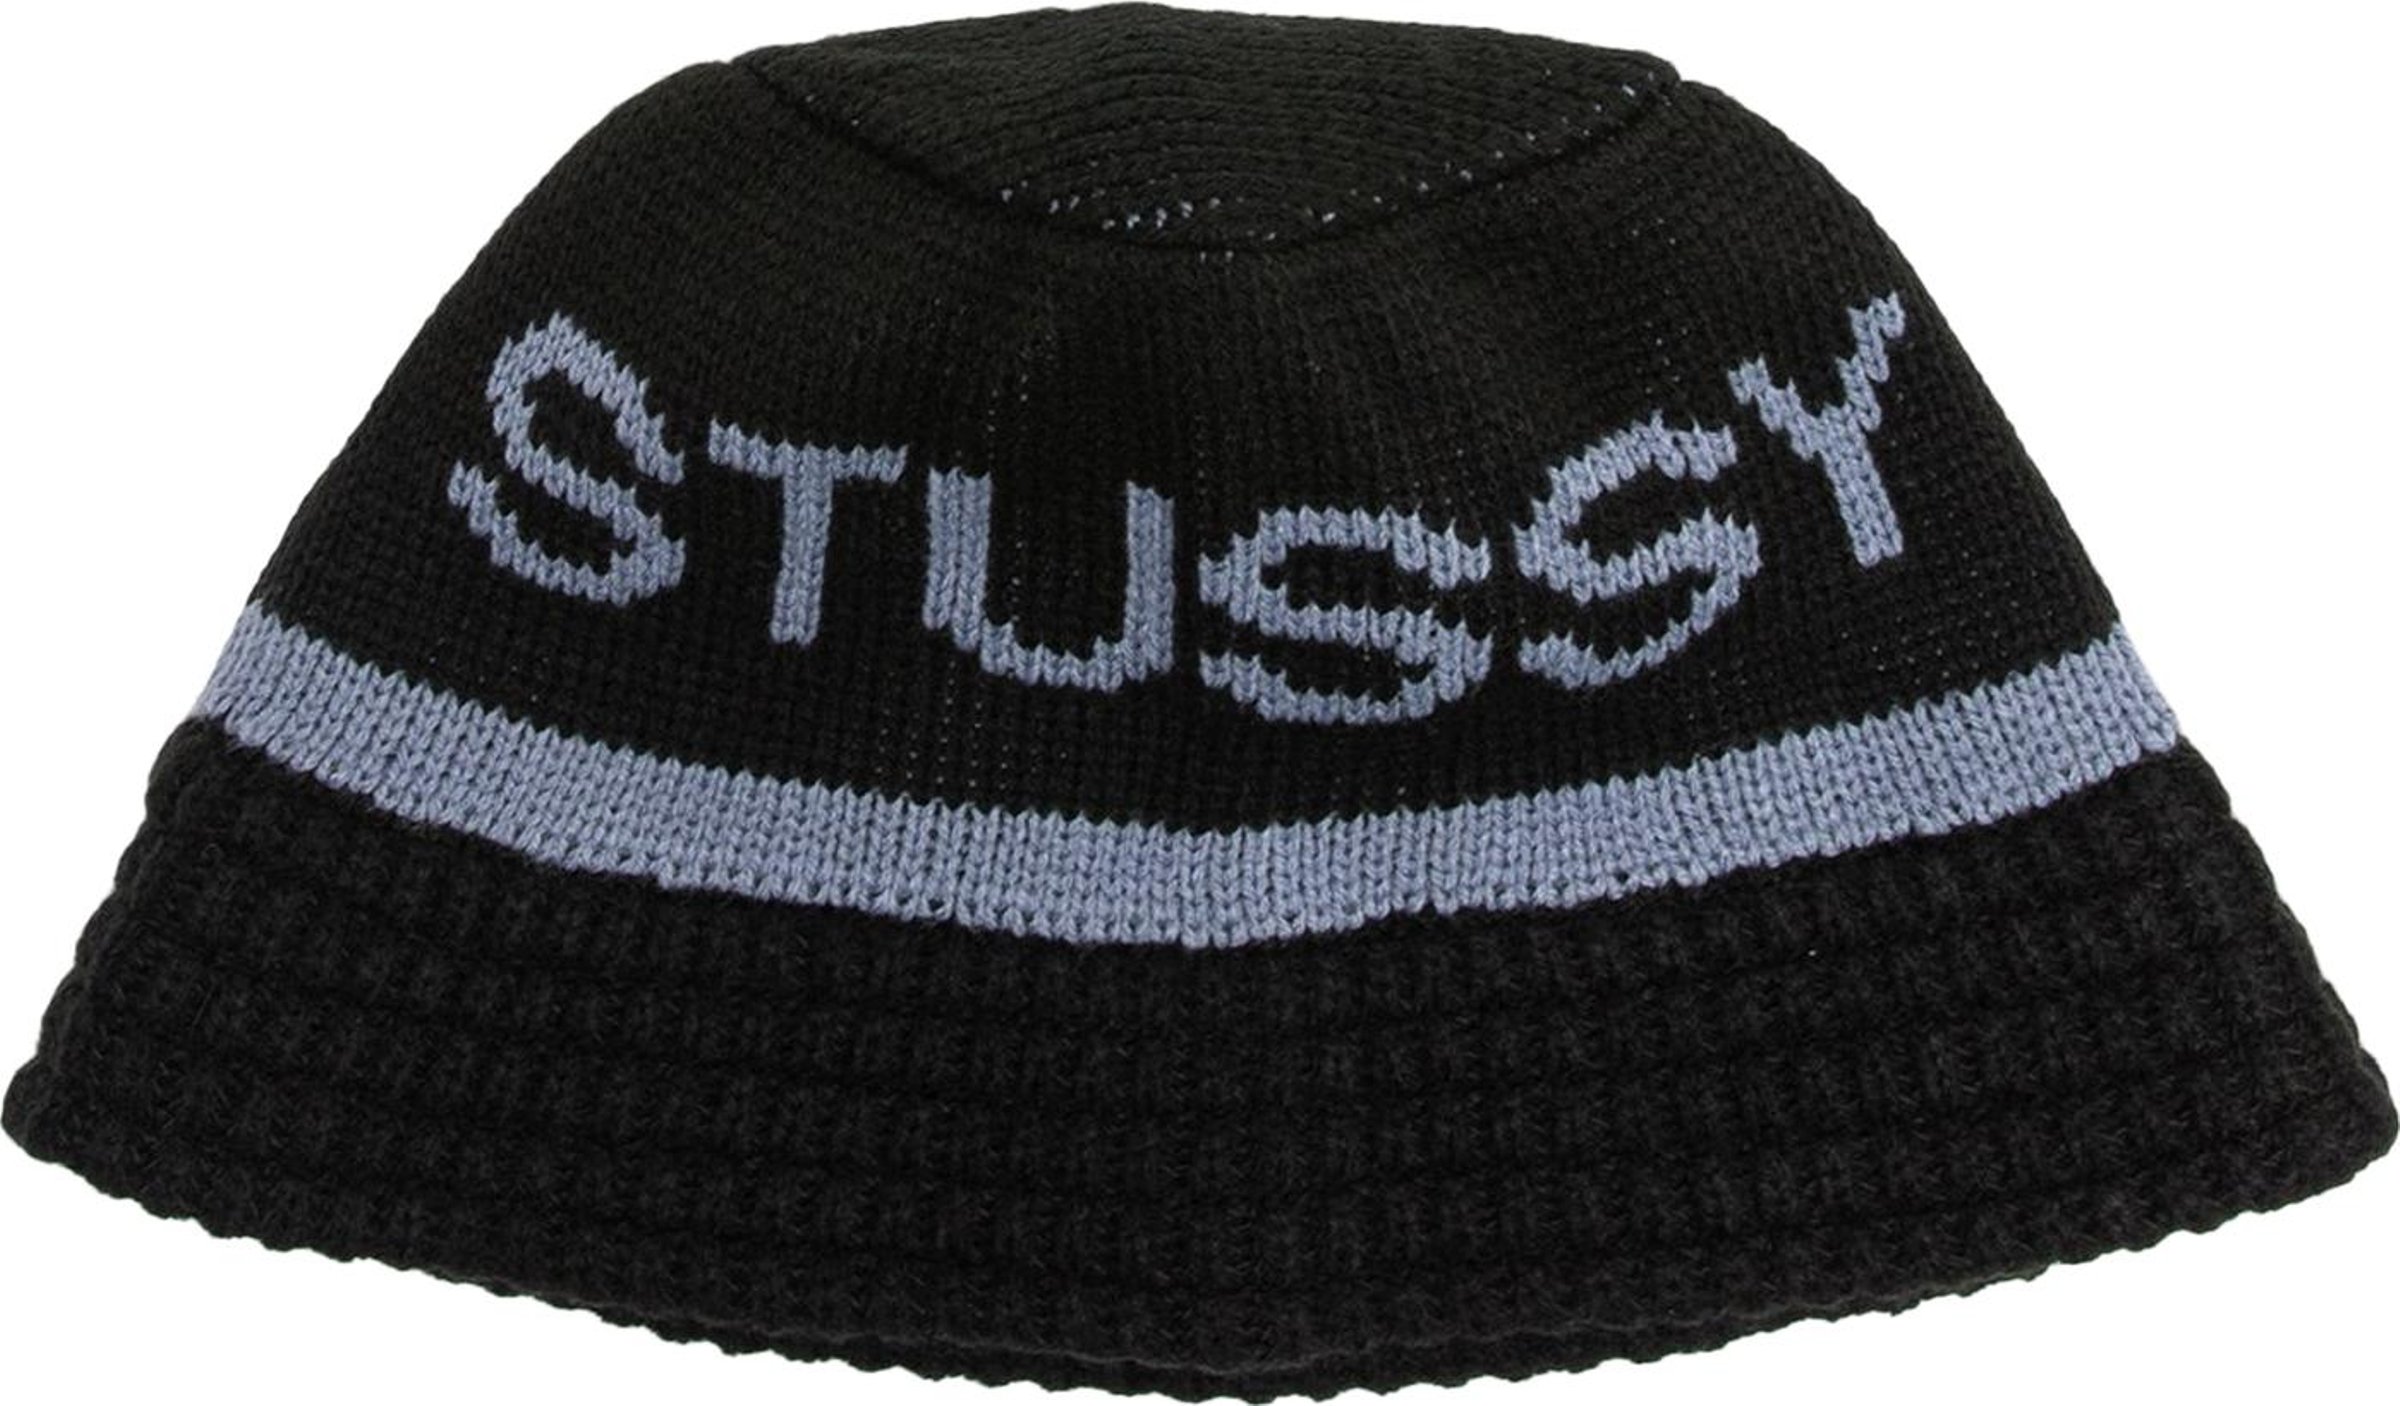 Buy Stussy Jacquard Knit Bucket Hat 'Black' - 1321095 BLAC | GOAT